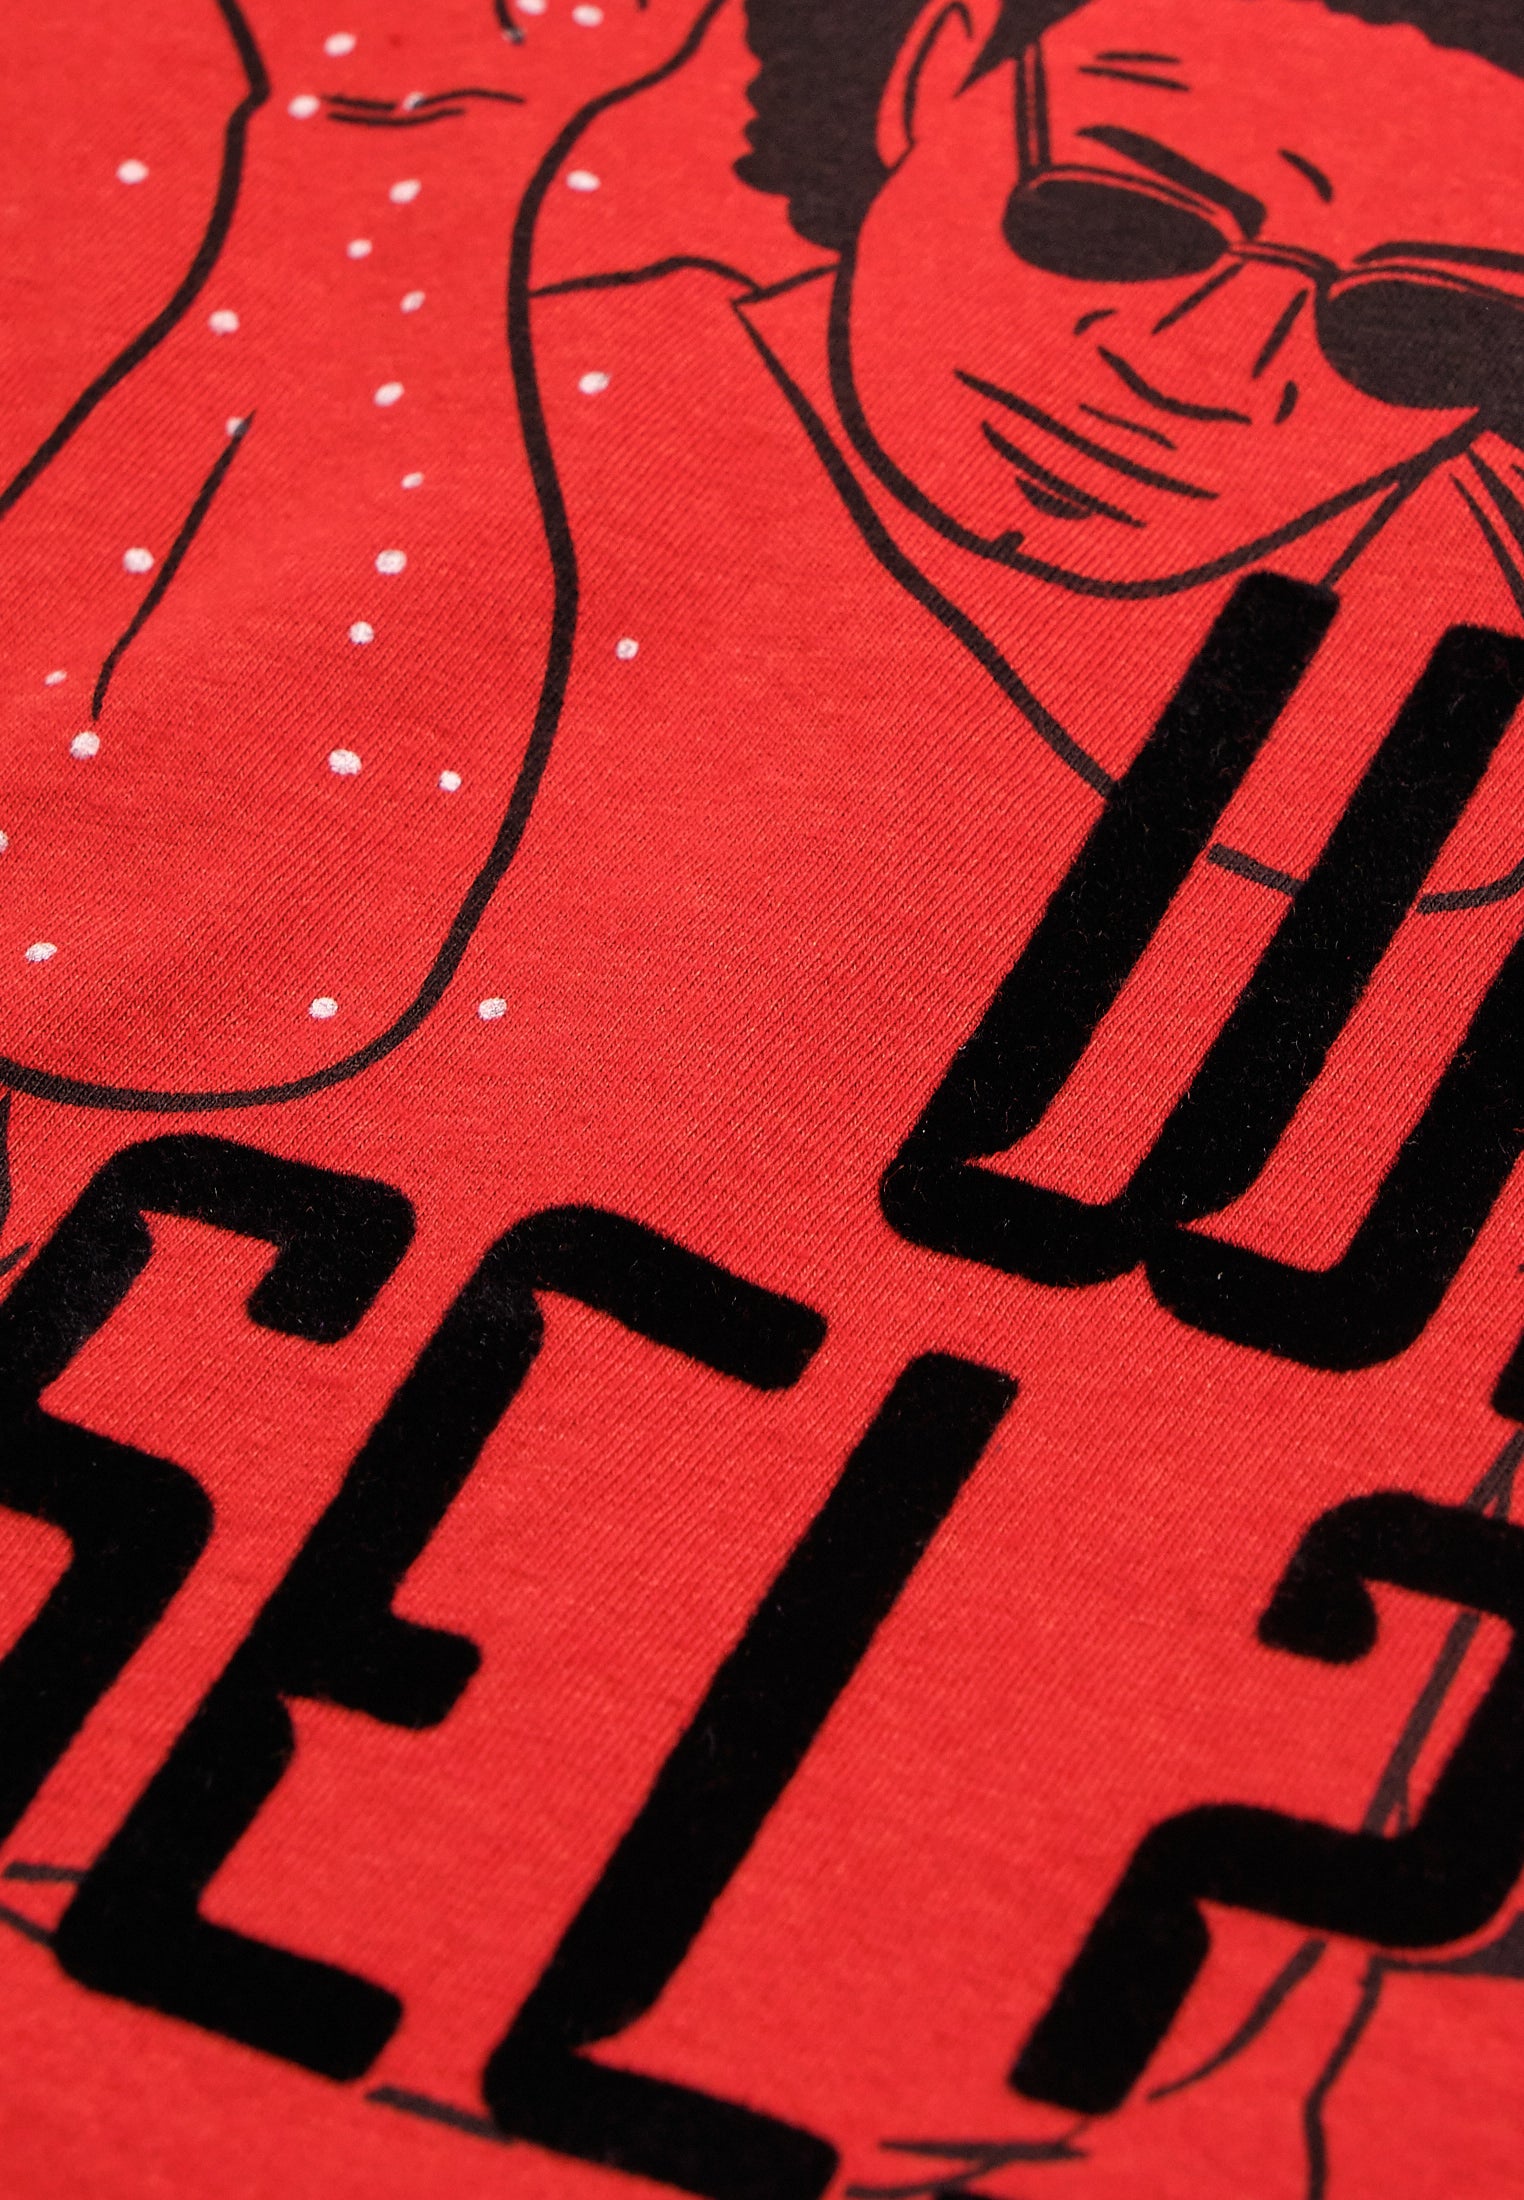 T-shirt Enfant Collector 02 Withsel Red | J&JOY.